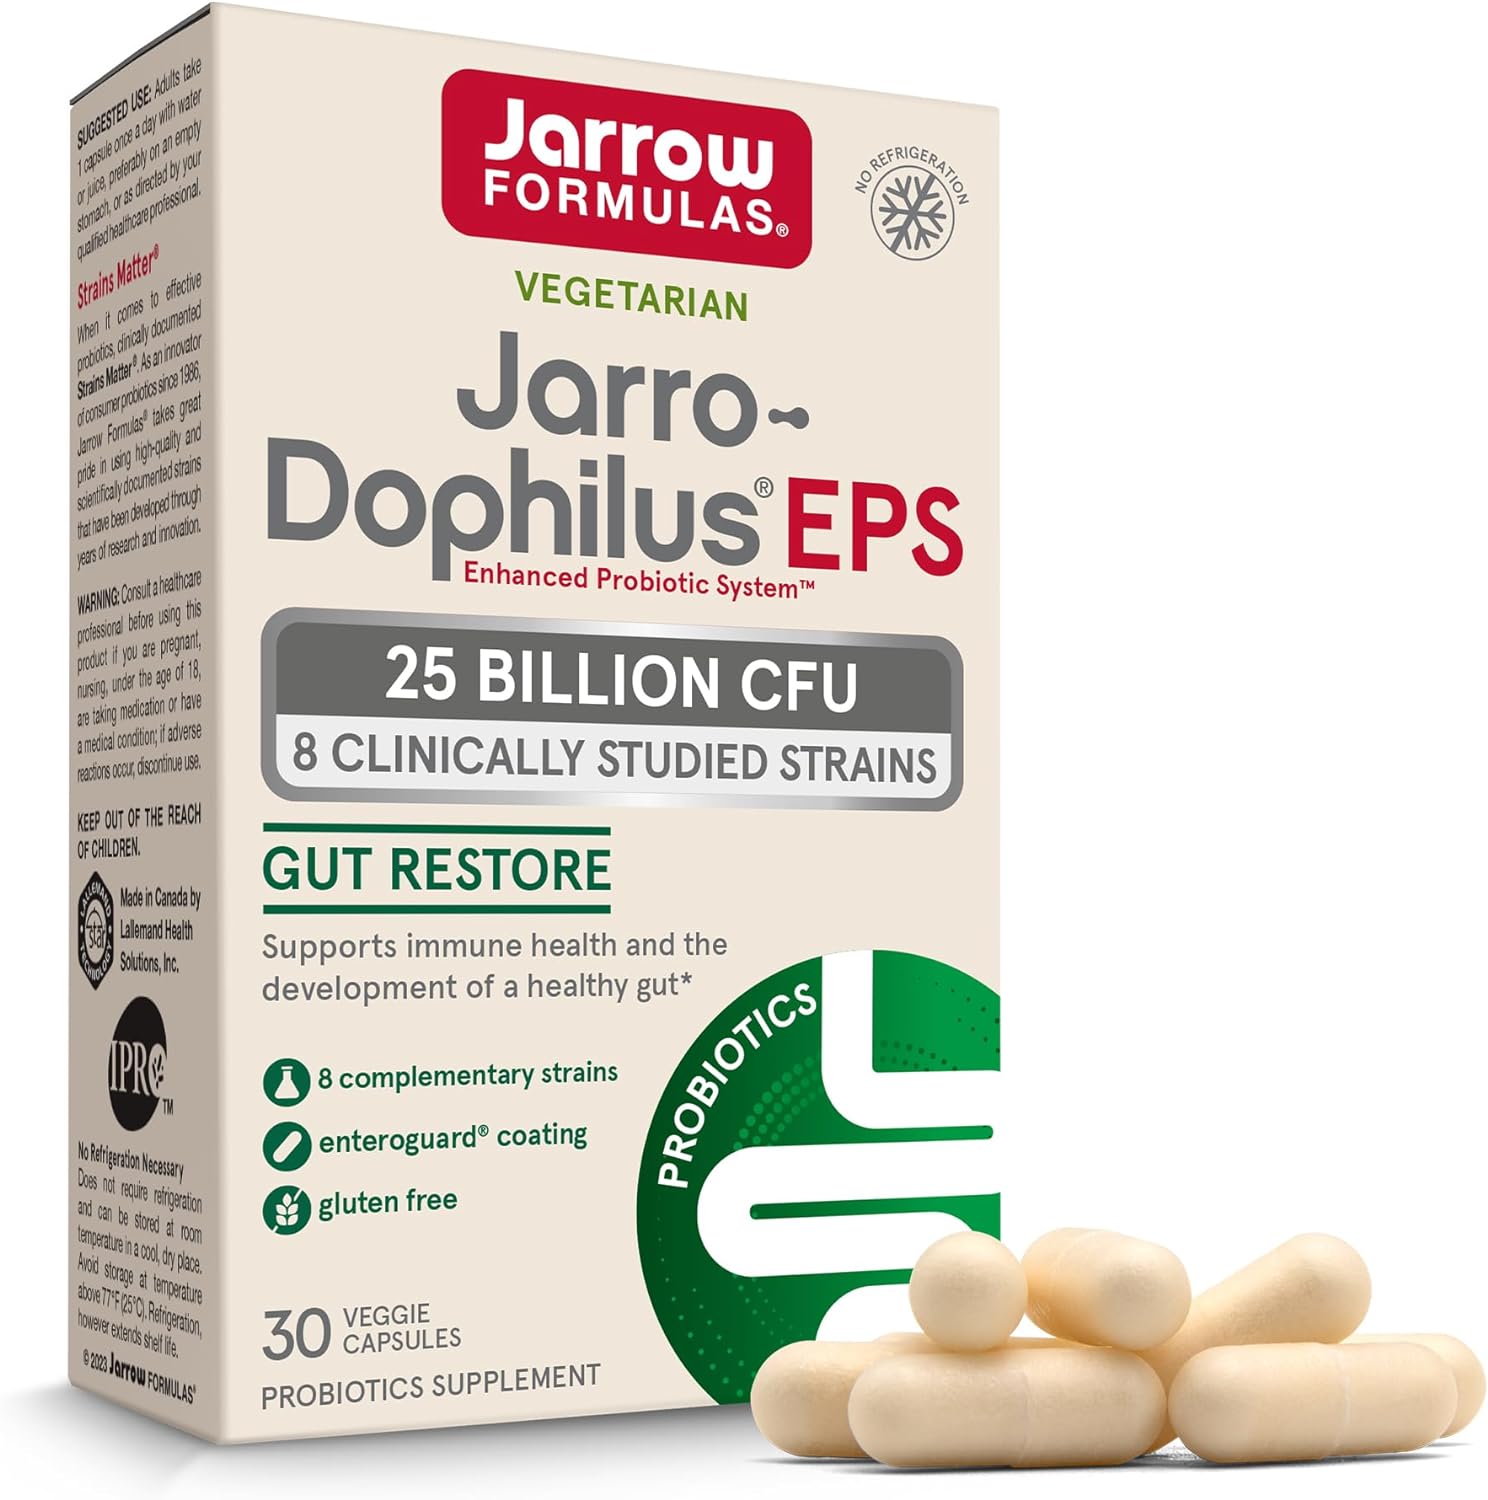 Jarrow Formulas Jarro-Dophilus EPS Gut Restore Probiotics 25